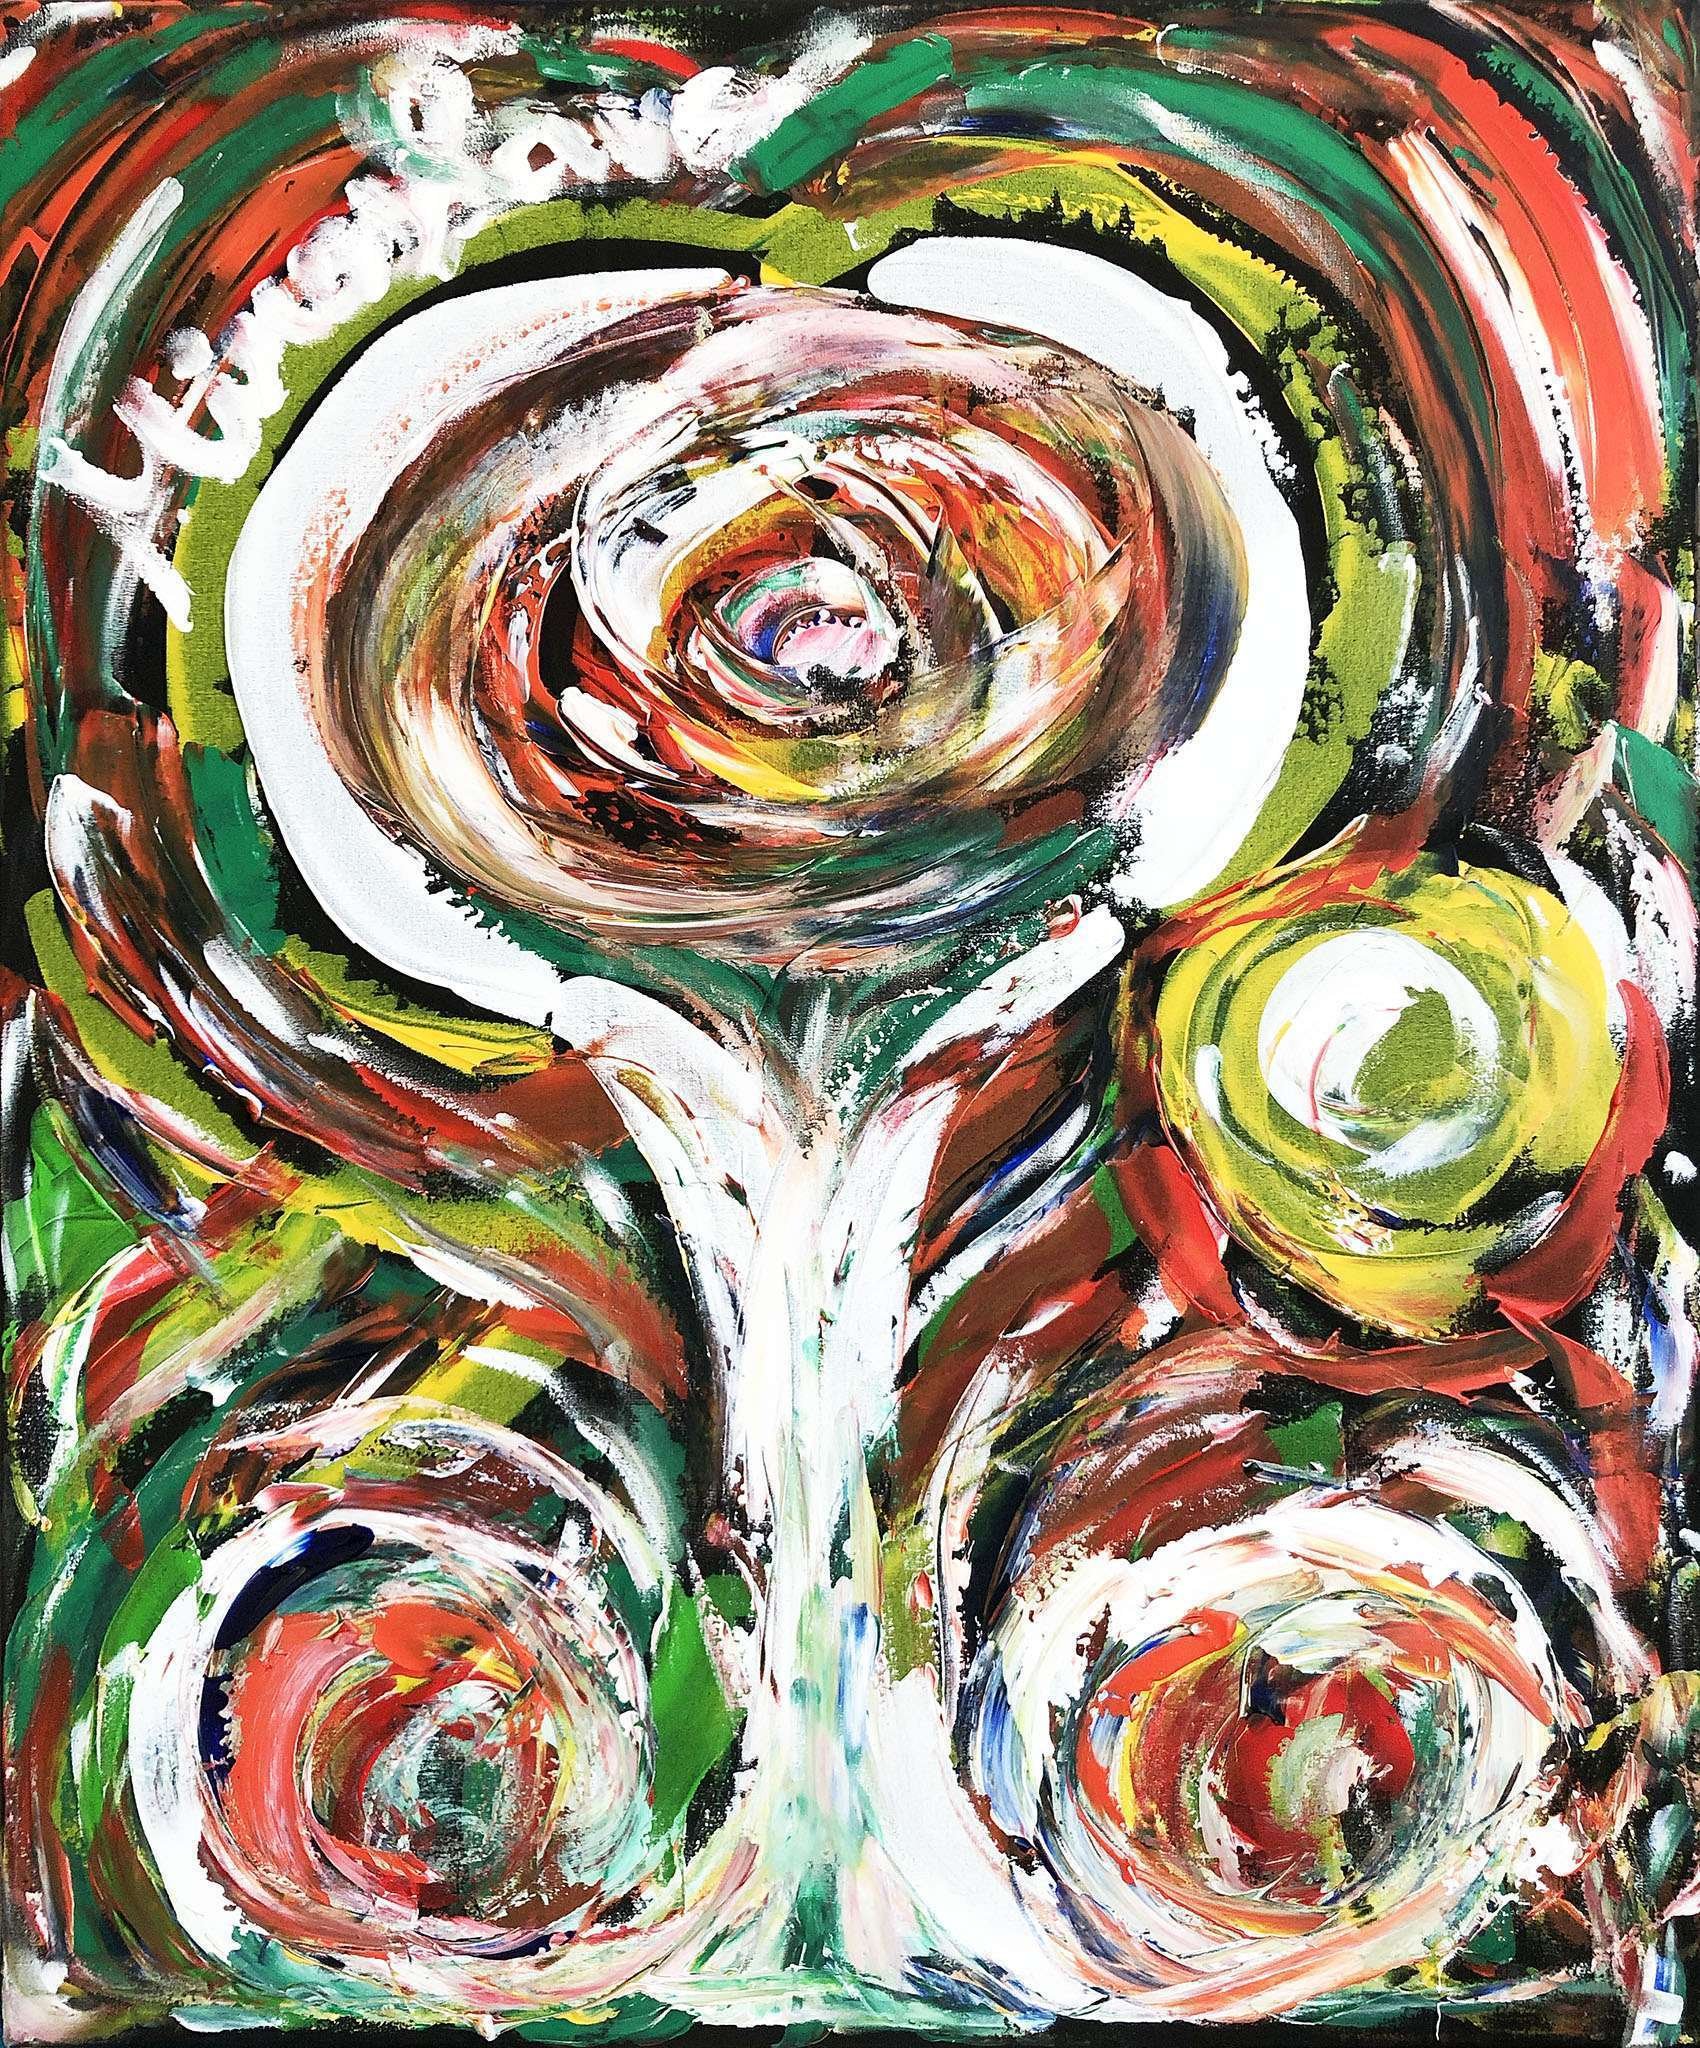 (English) Miroslavo’s Paintings: Roses